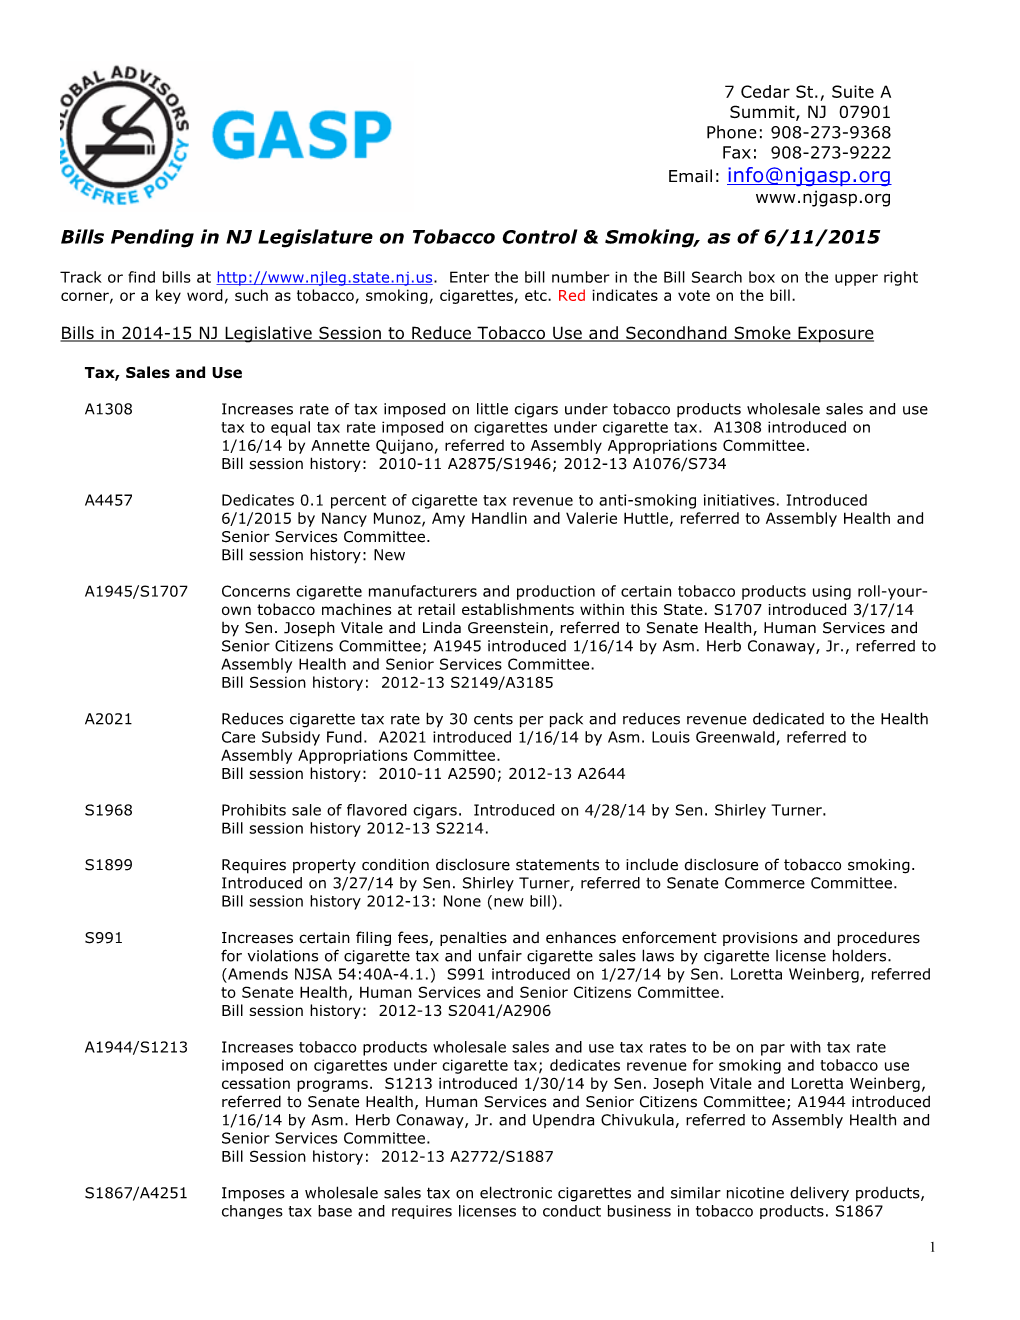 Email: Info@Njgasp.Org Bills Pending in NJ Legislature on Tobacco Control & Smoking, As of 6/11/2015